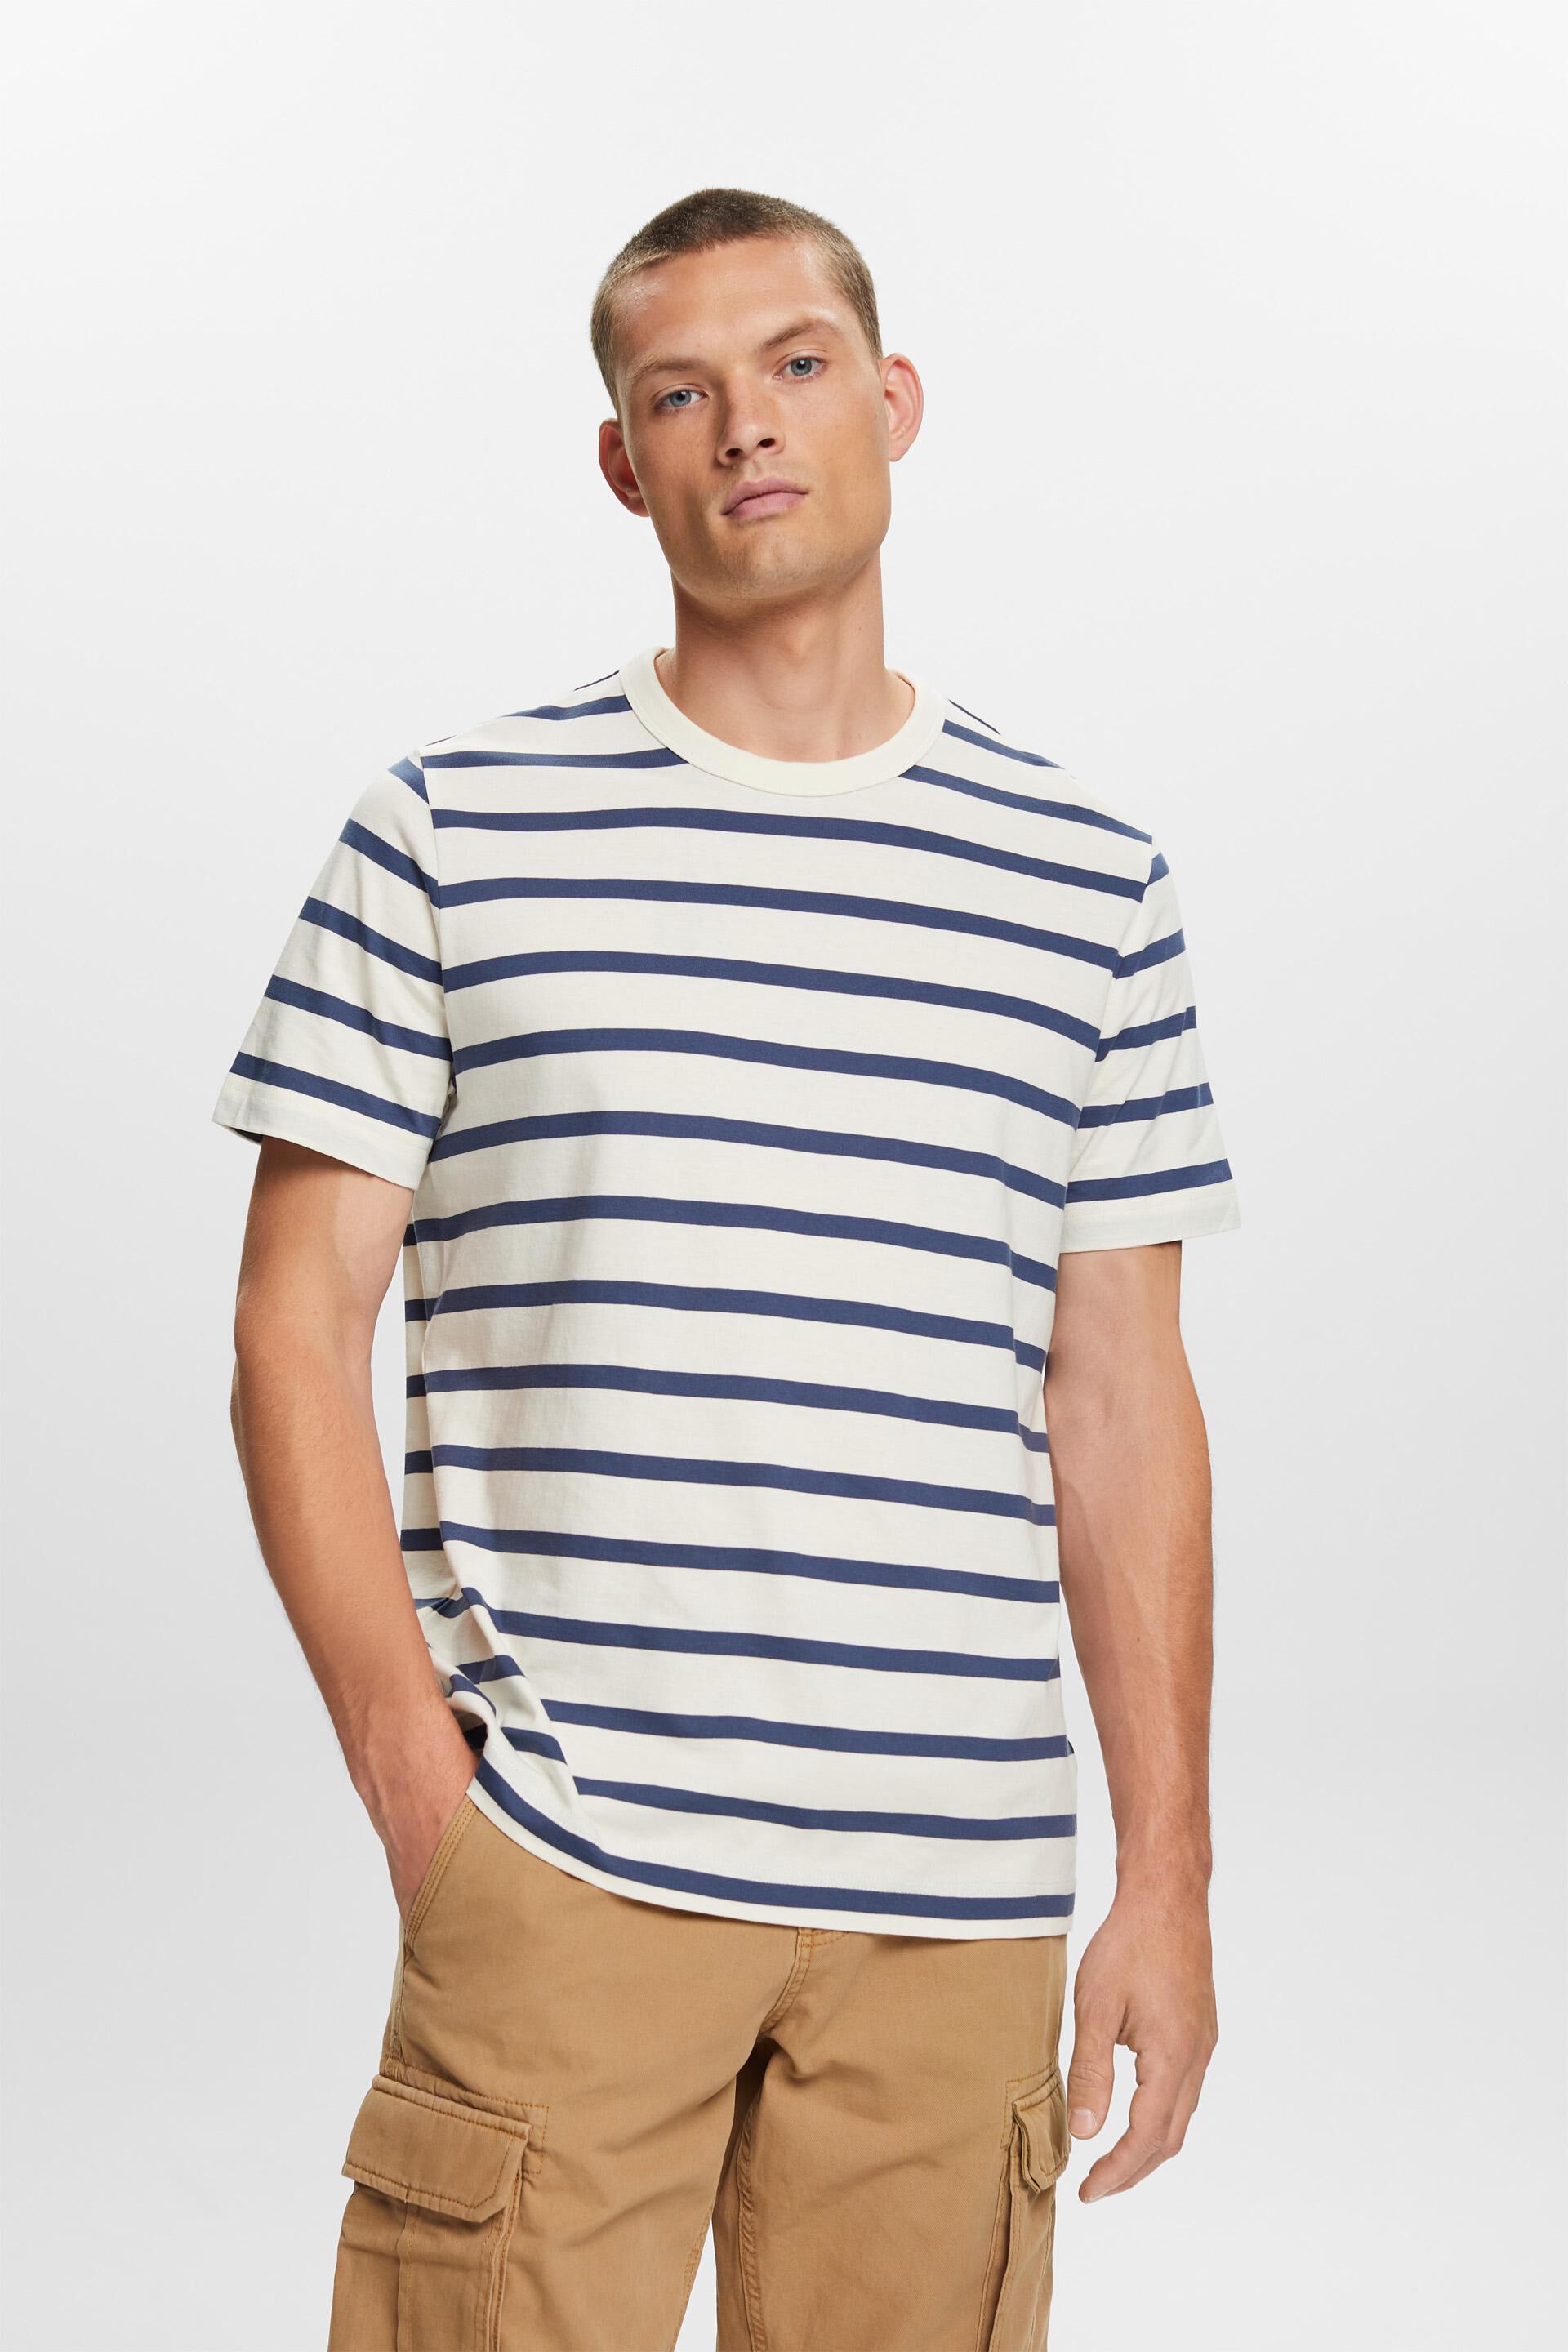 Esprit Bikini Striped jersey t-shirt, 100% cotton